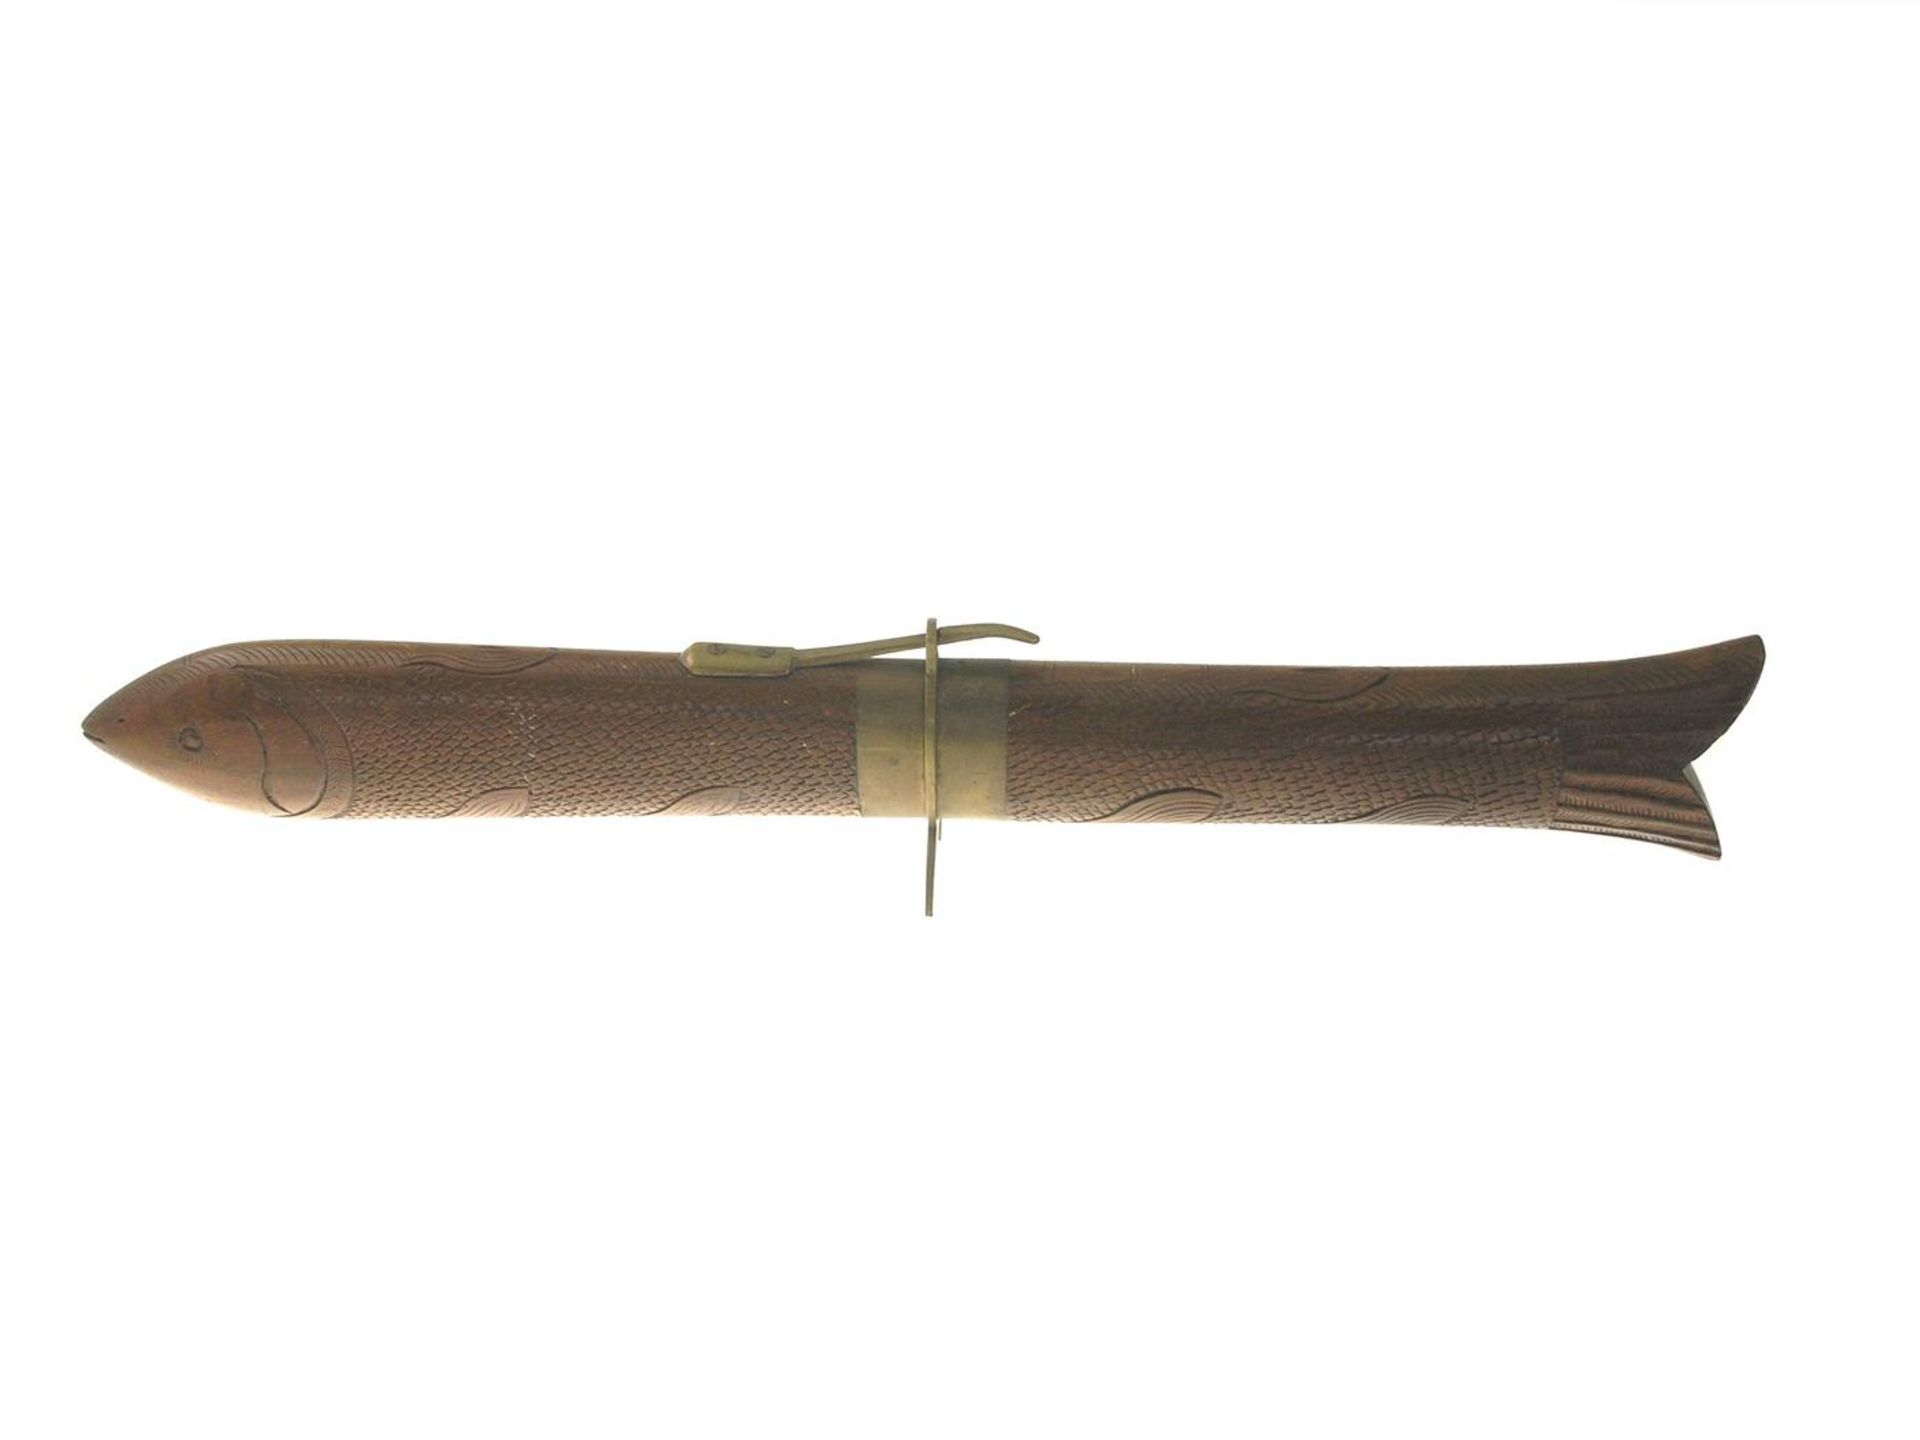 Tranchierbesteck/Jagdbesteck: Indien um 1900 Ca. 43cm lang, Behälter aus Holz, aufwändig - Bild 2 aus 2